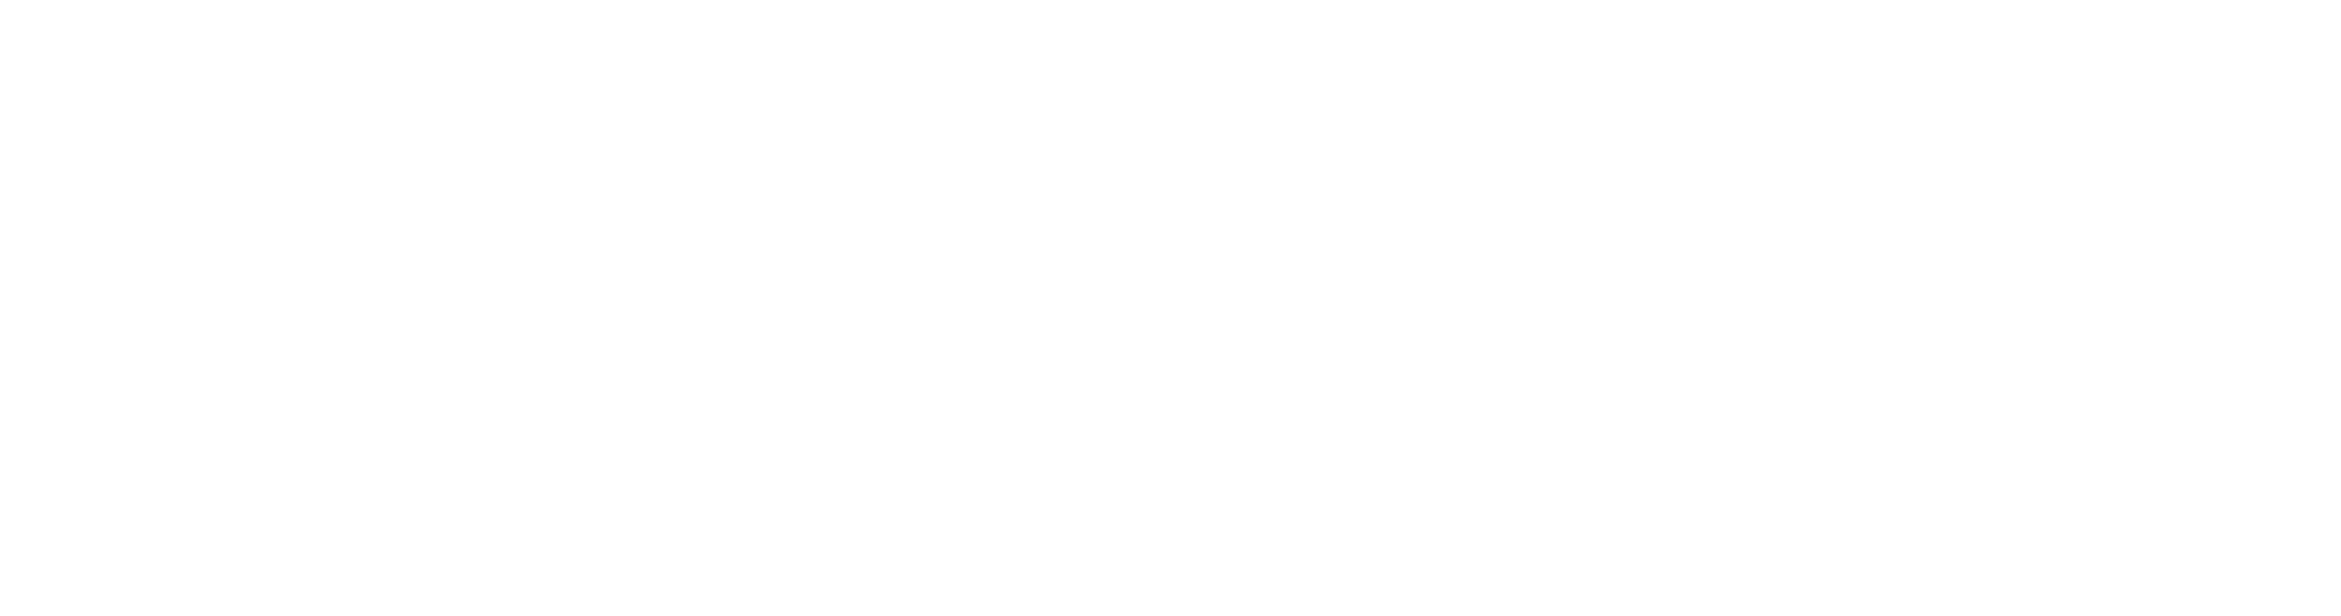 Emirates Scholar Research Center